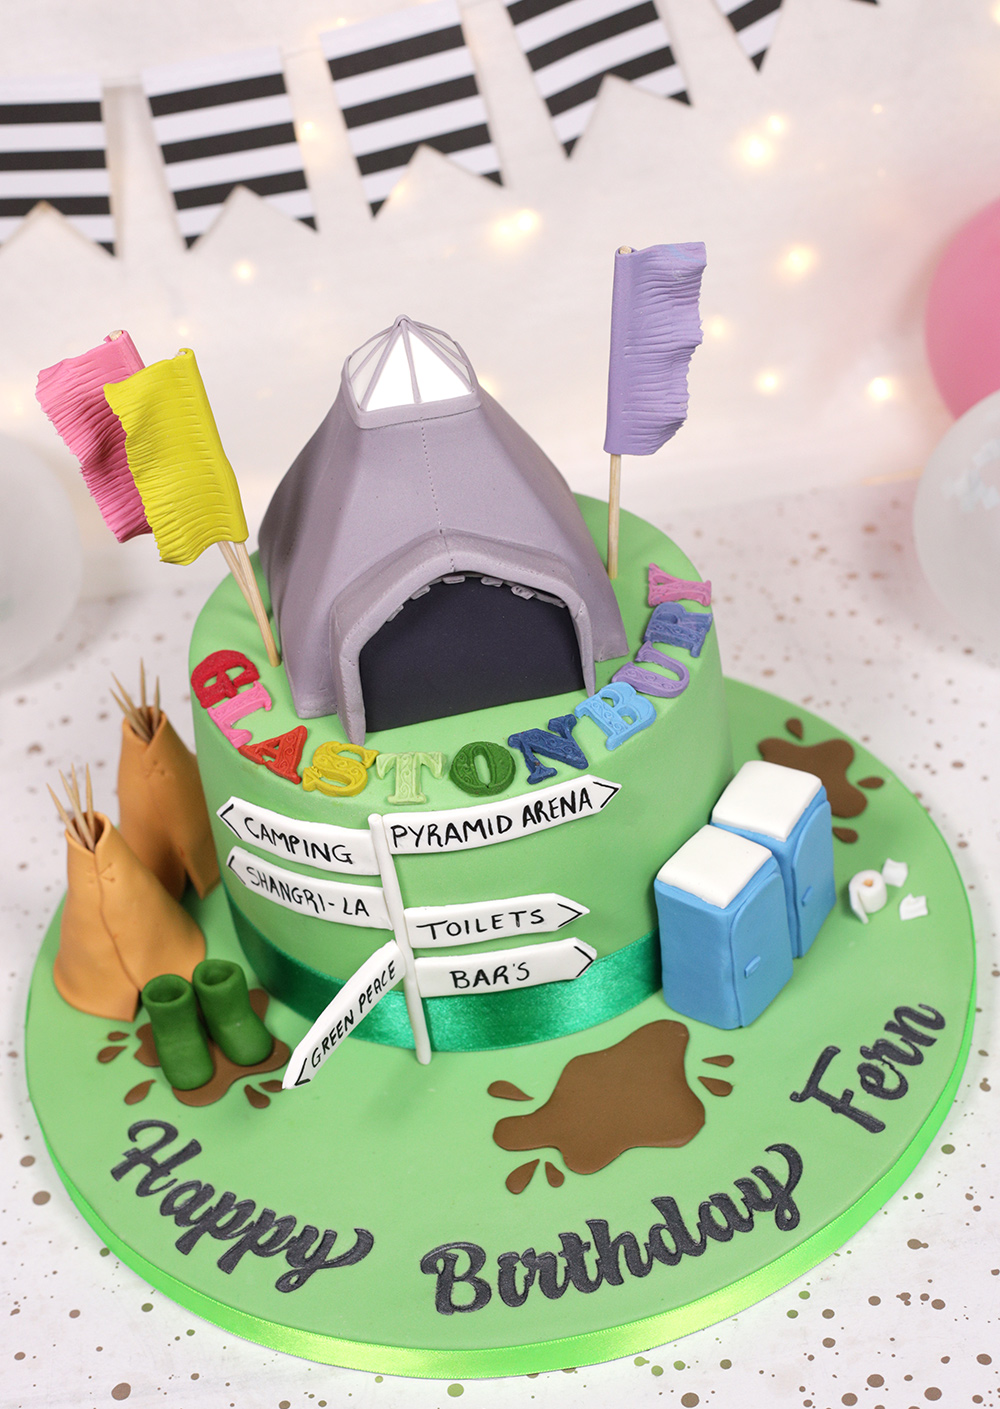 Sugar Cloud Cakes  Cake Designer Nantwich Crewe Cheshire  A Festival  Themed 21st Birthday Cake